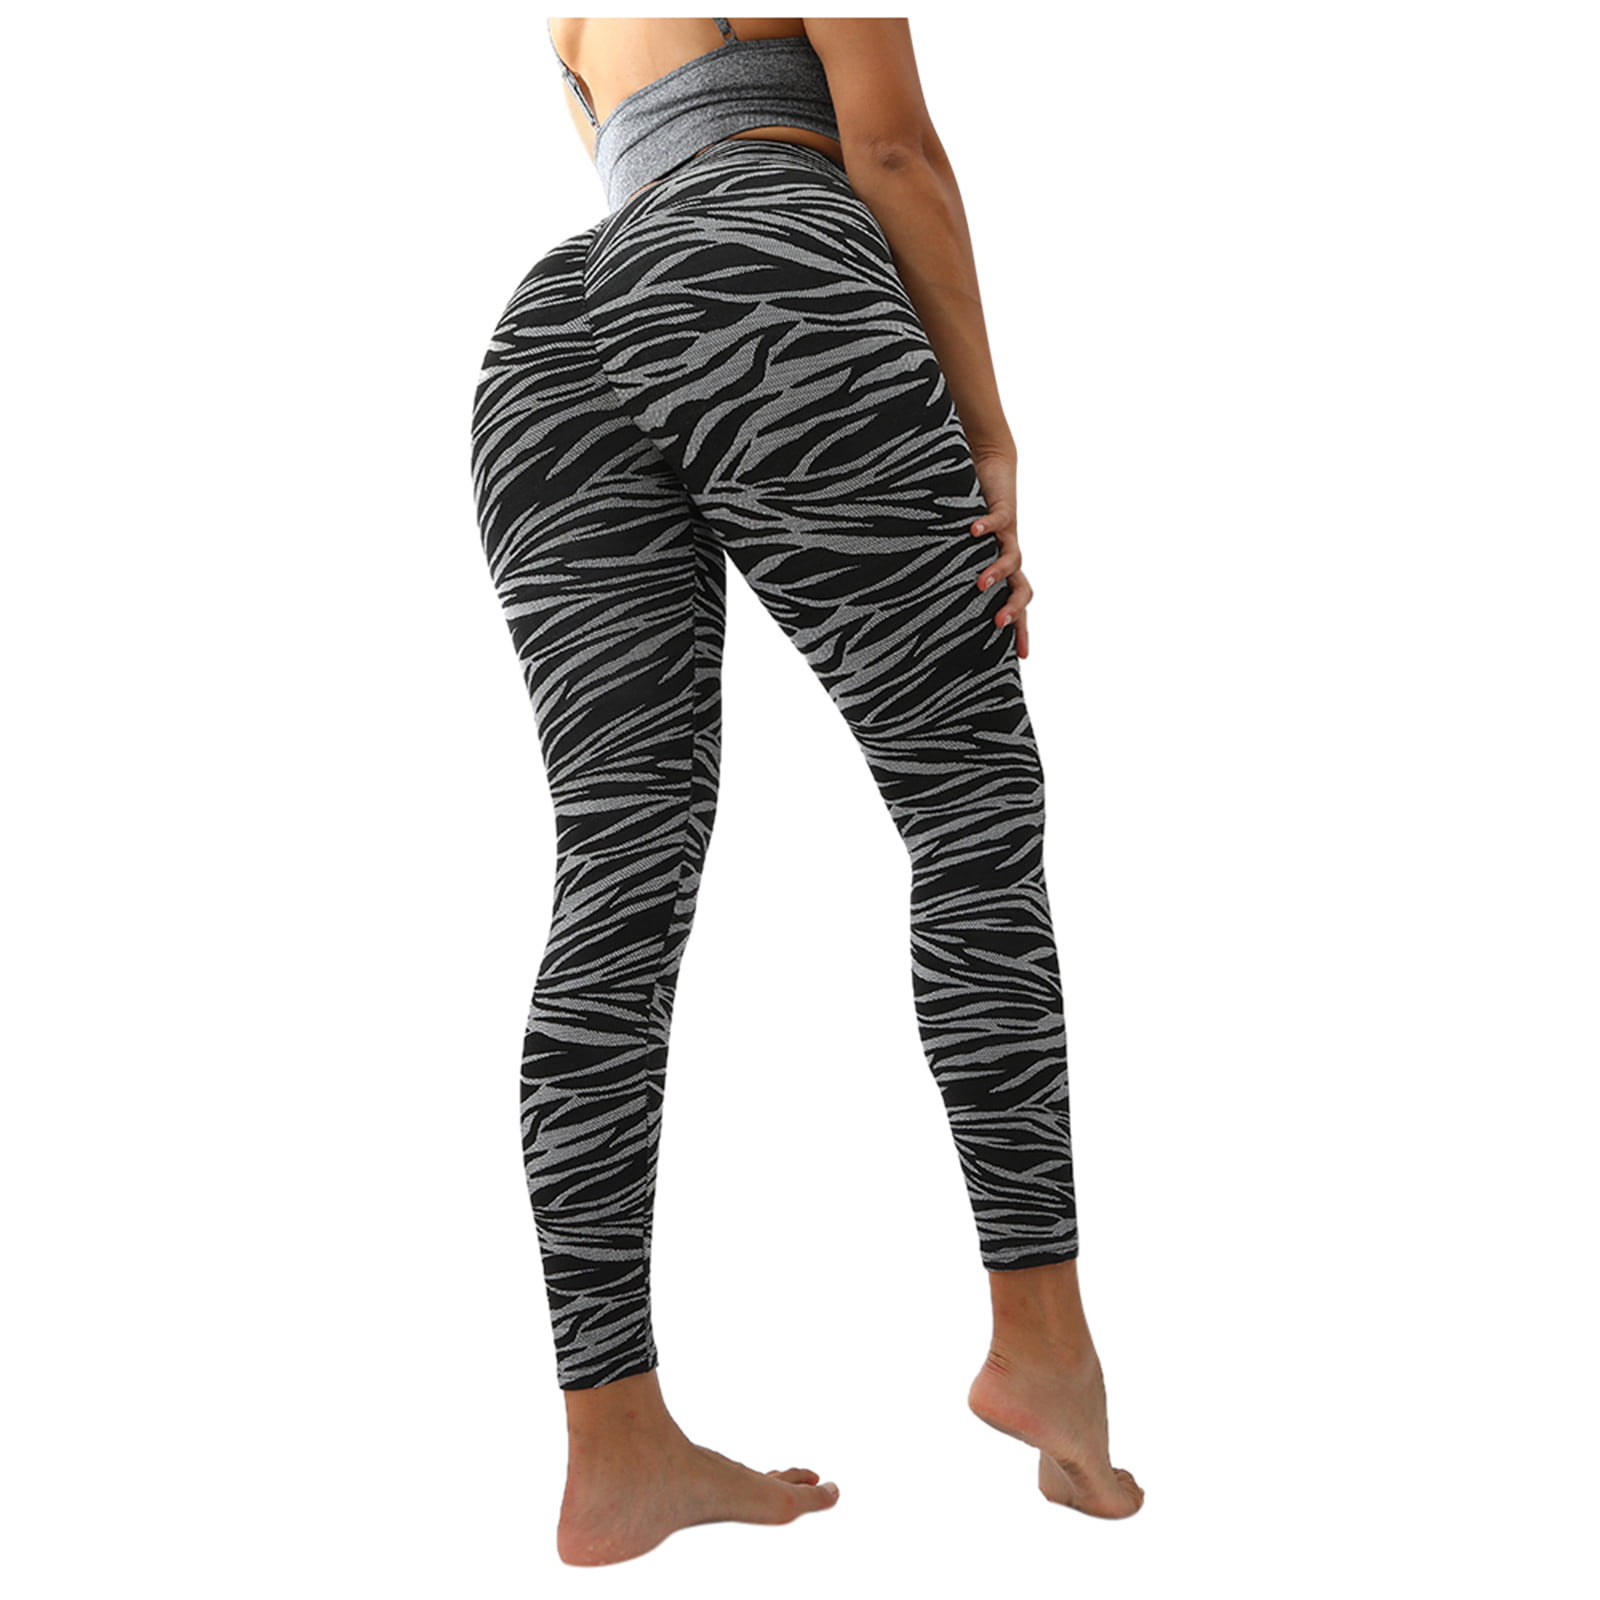 Gubotare Yoga Pants For Women Bootcut Women's Casual Bootleg Yoga